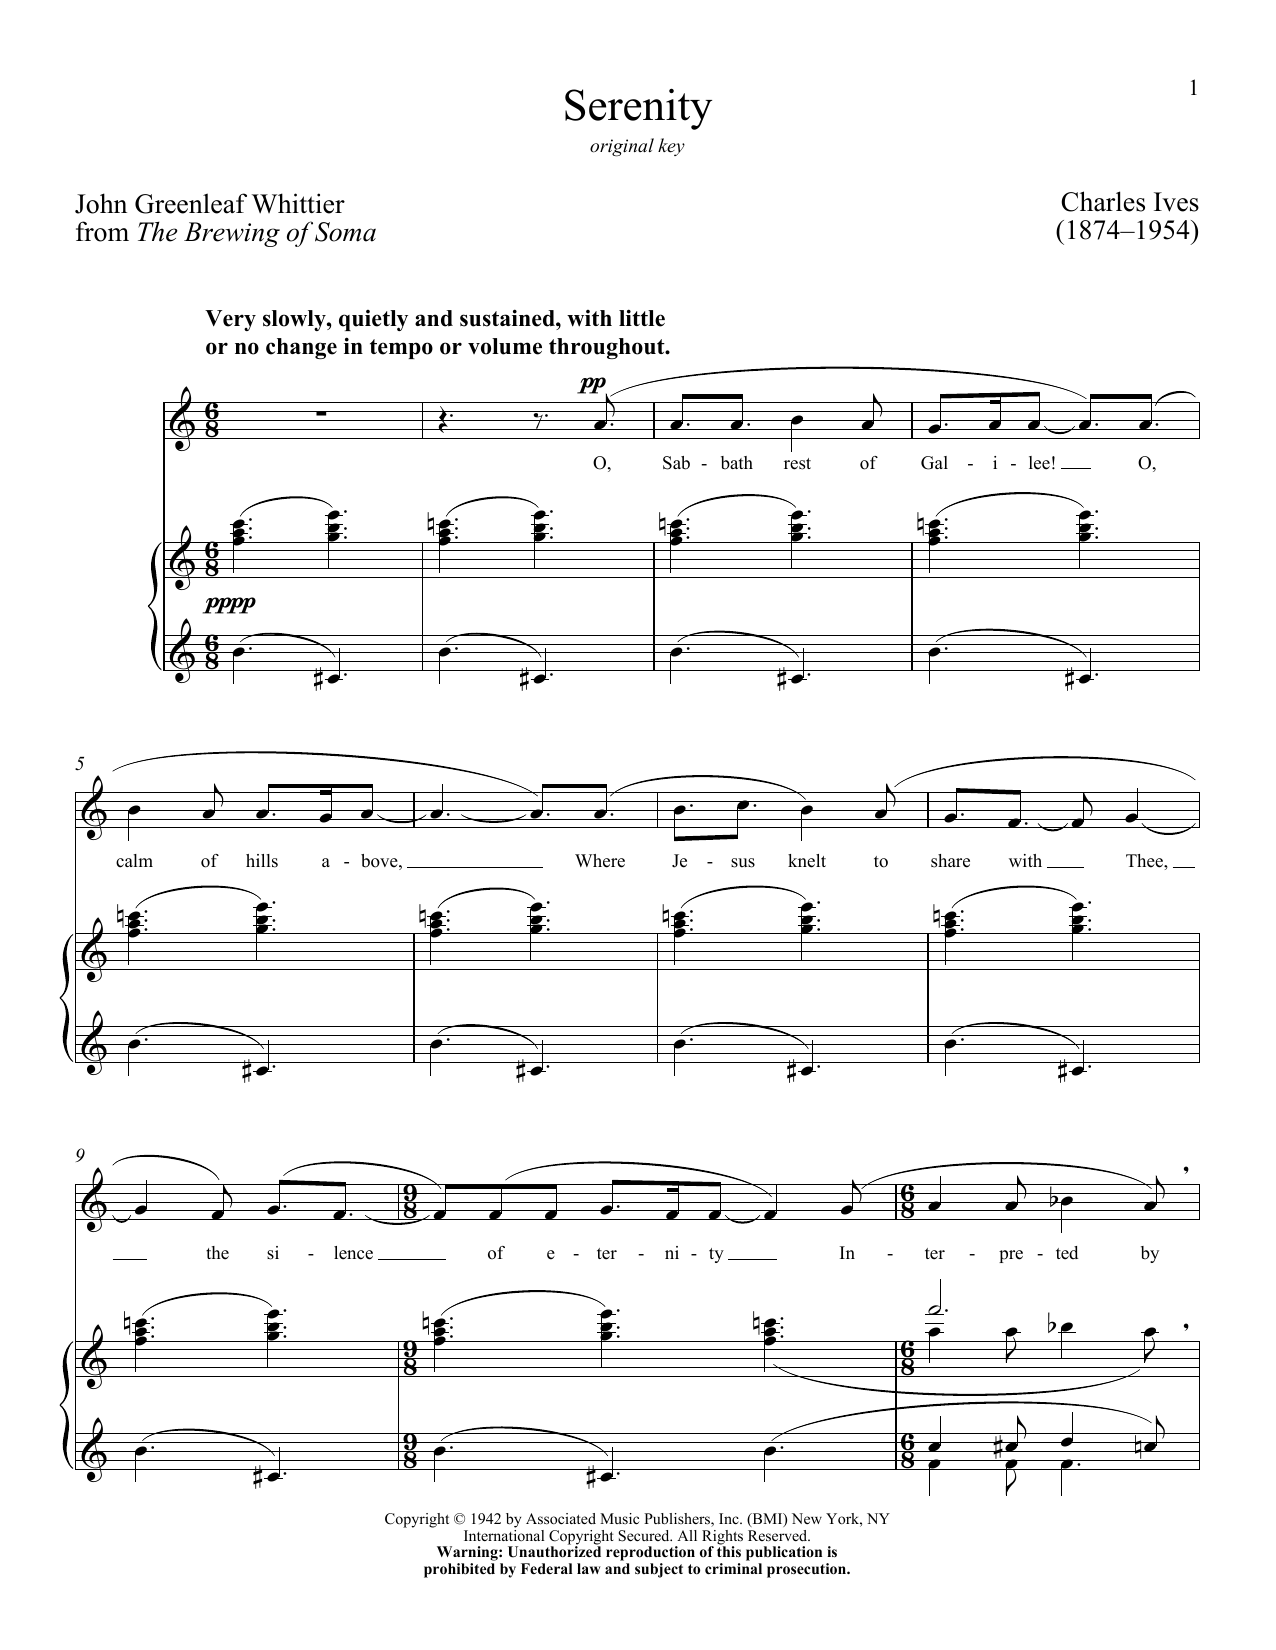 Download Charles Ives Serenity Sheet Music